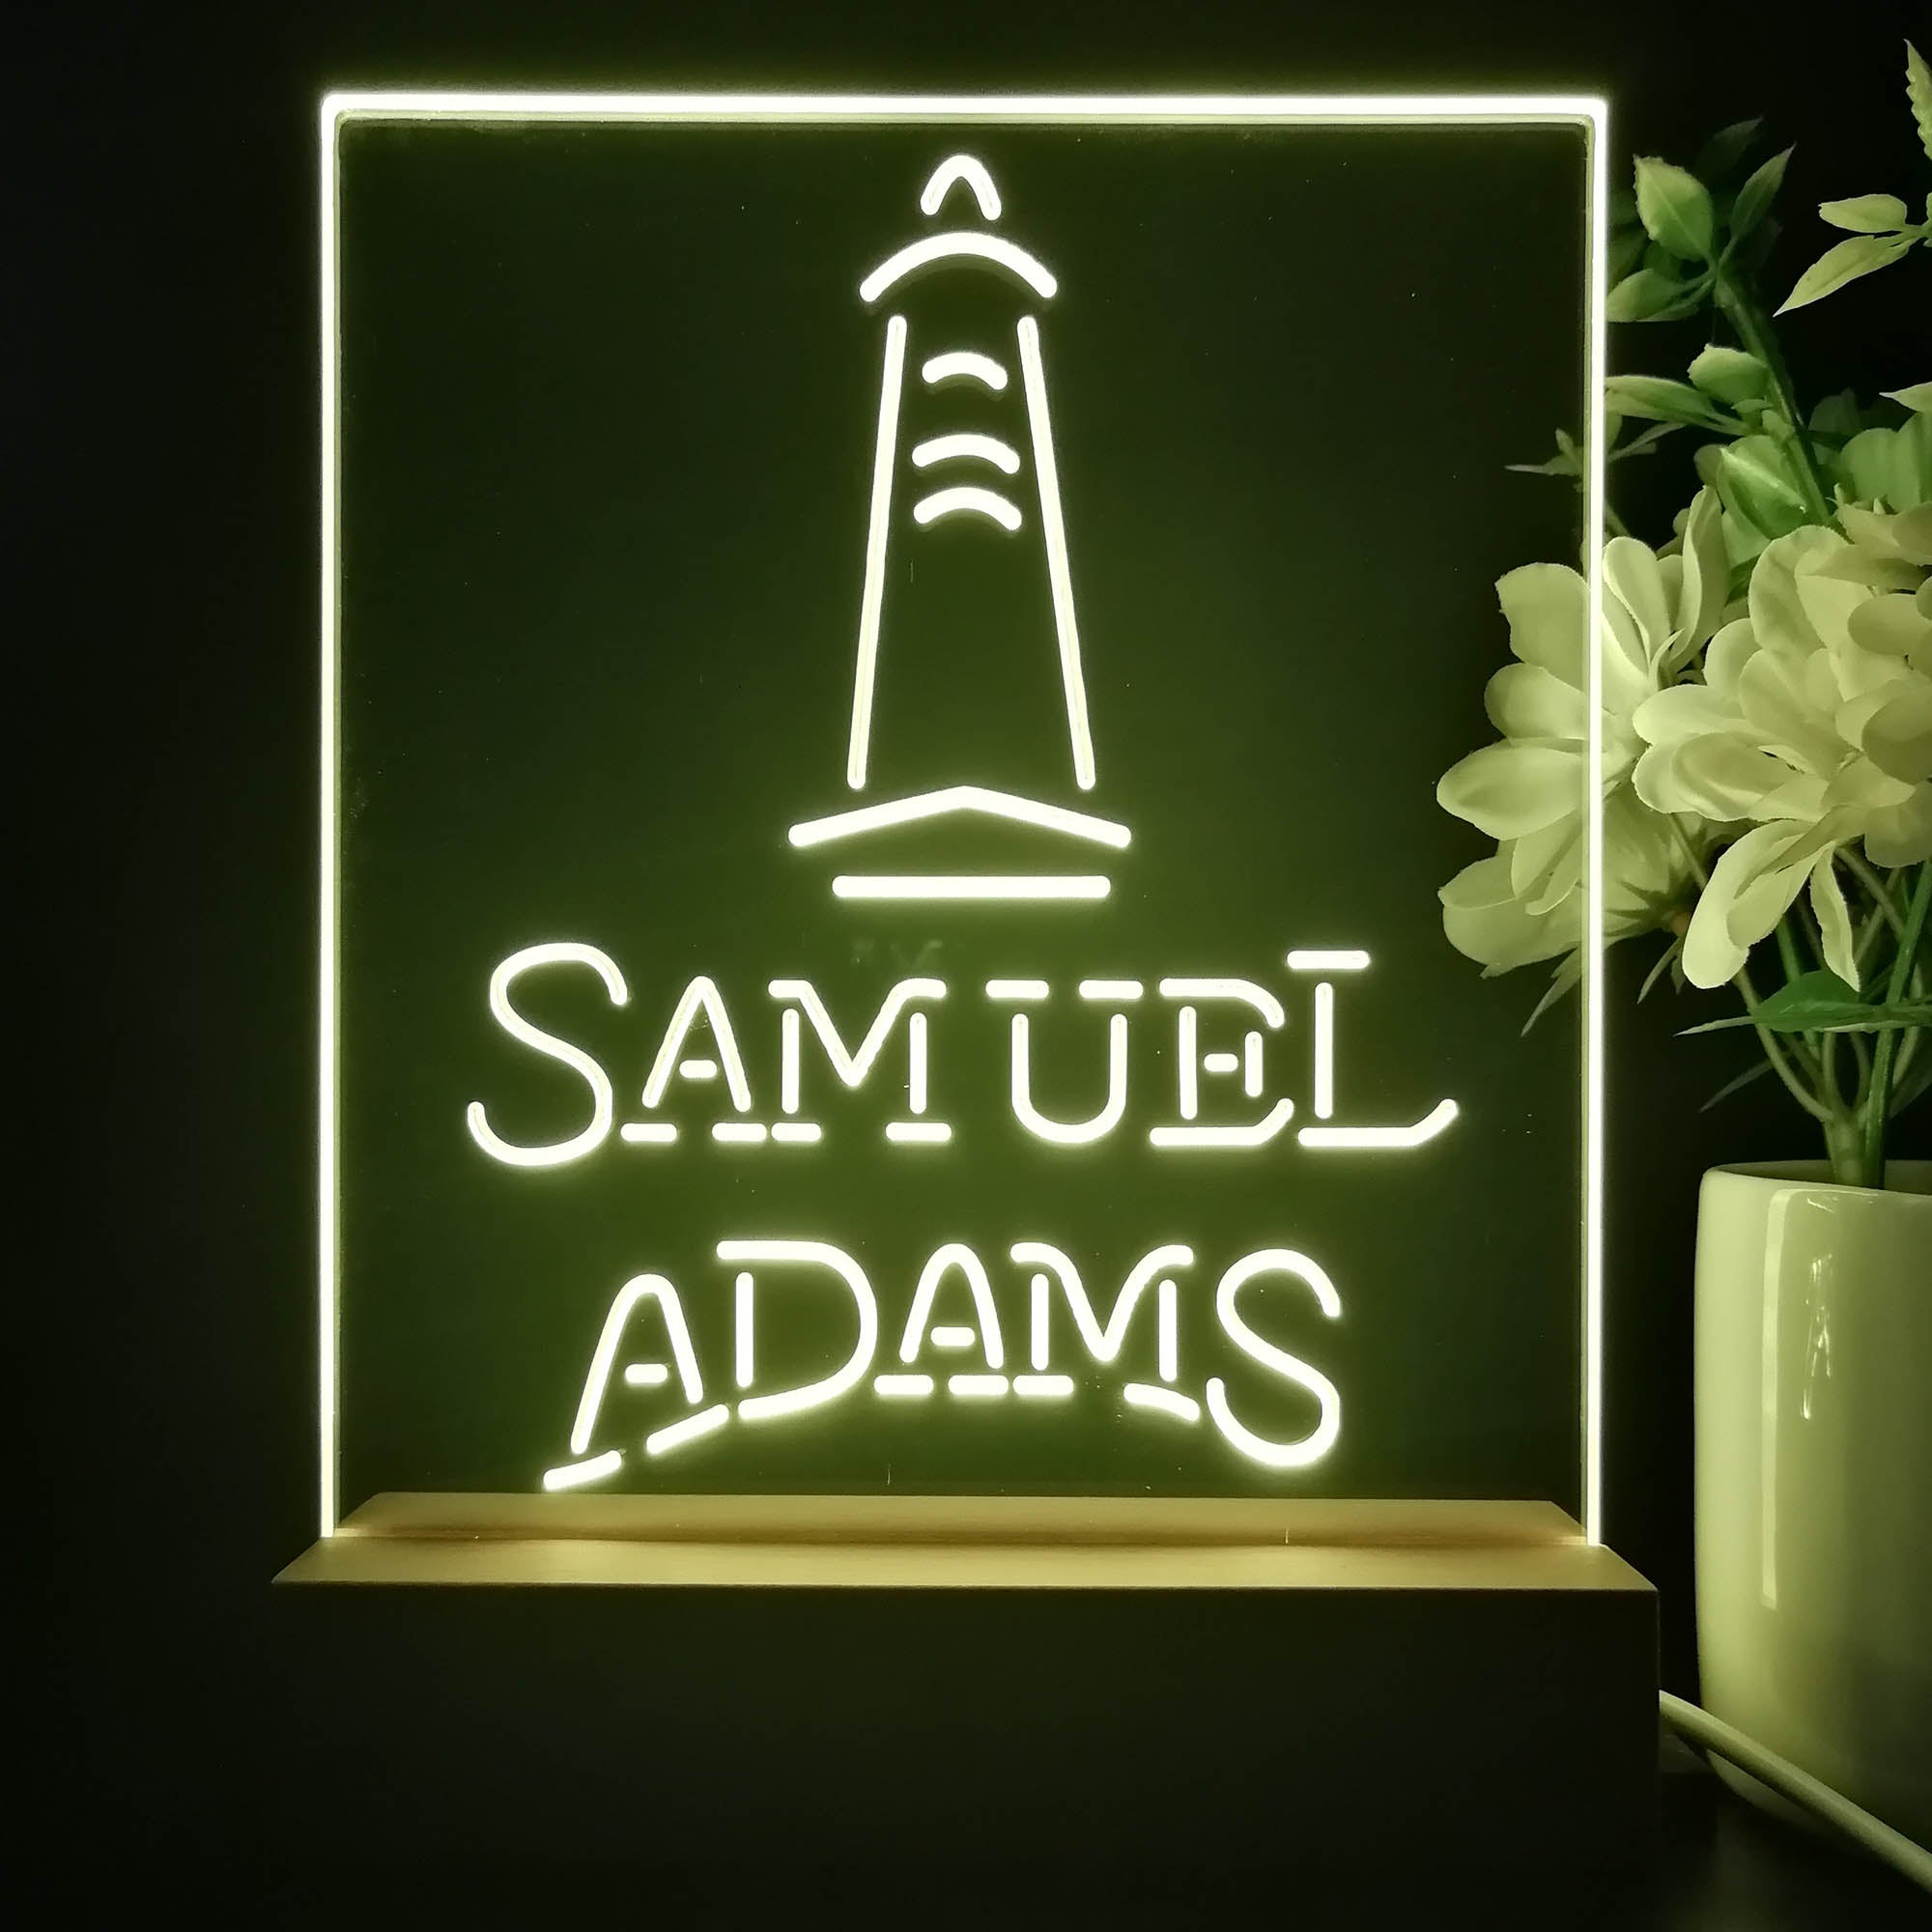 Samuel Adams Lighthouse Night Light Neon Pub Bar Lamp